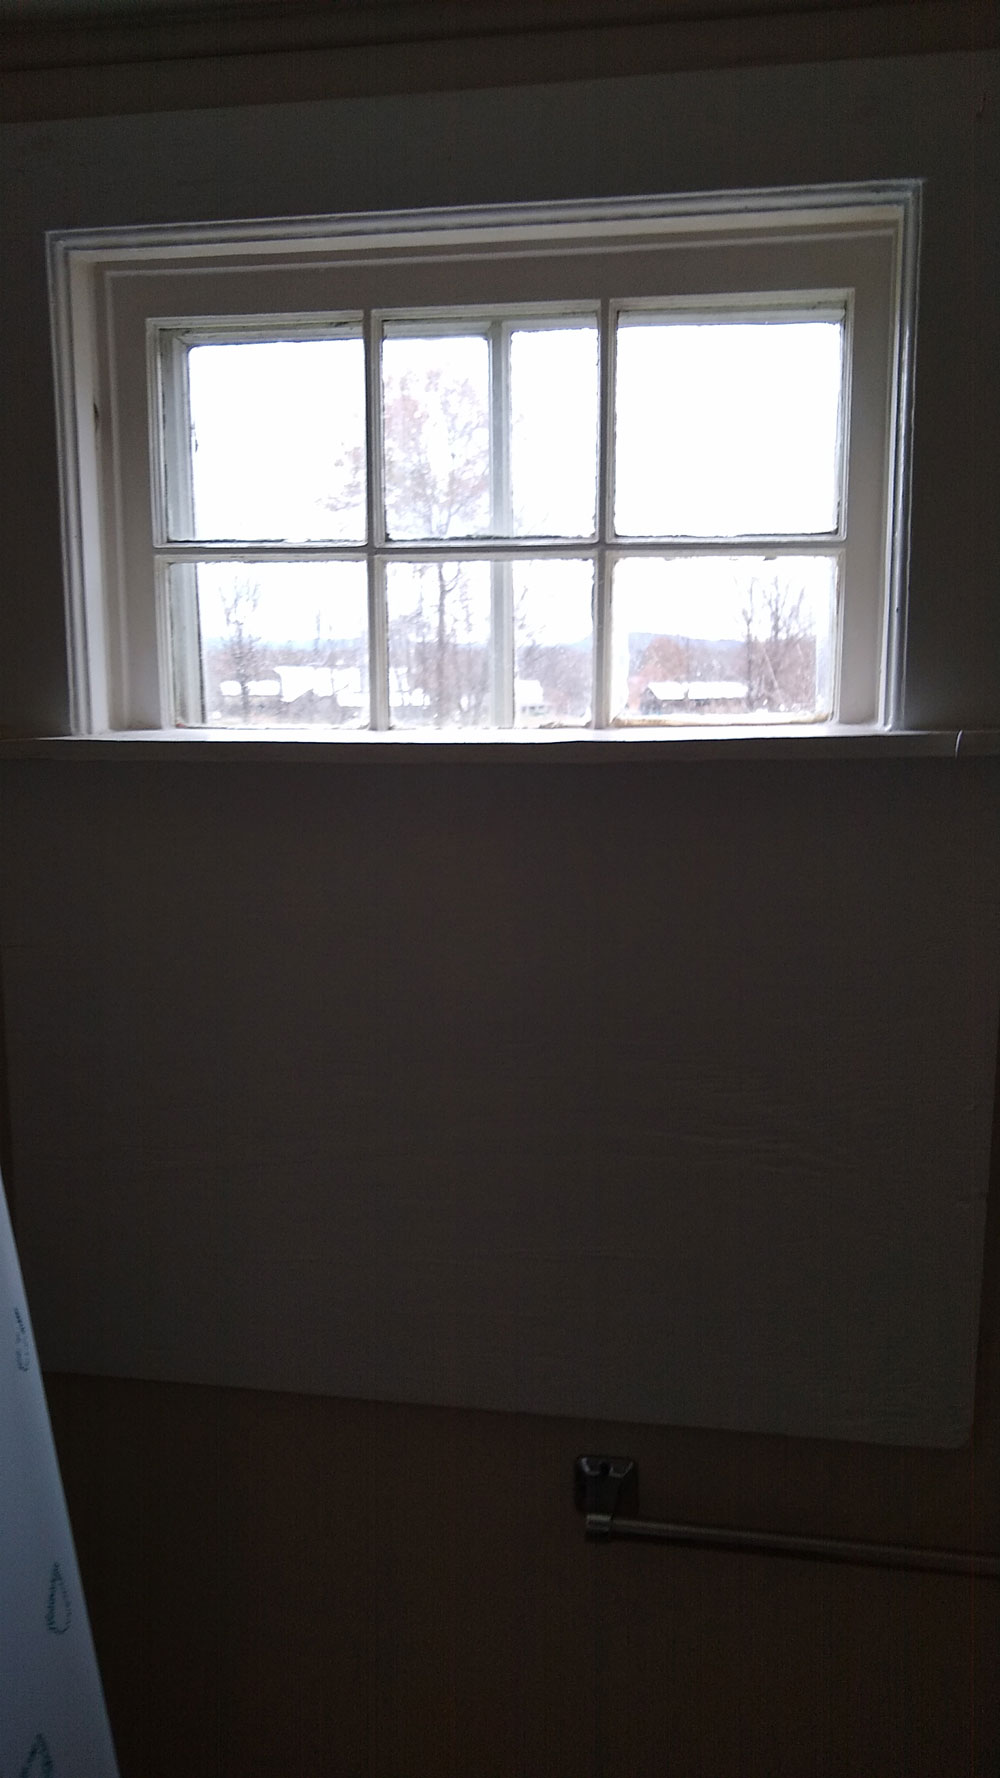 Old bathroom window in Century home in Hadley, MA, before upgrade to vinyl windows